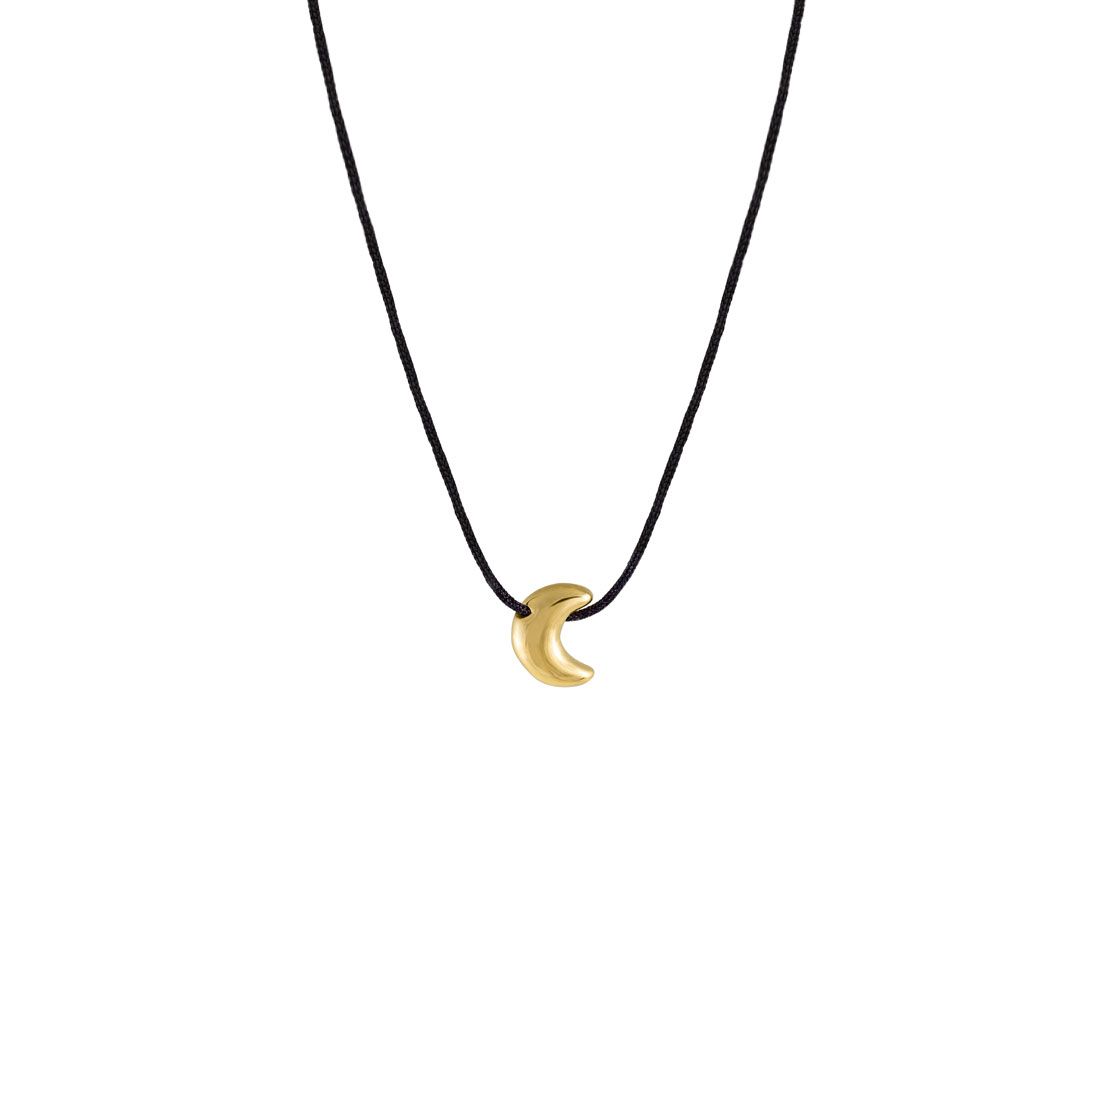 Little quarter moon pendant, on a black cord